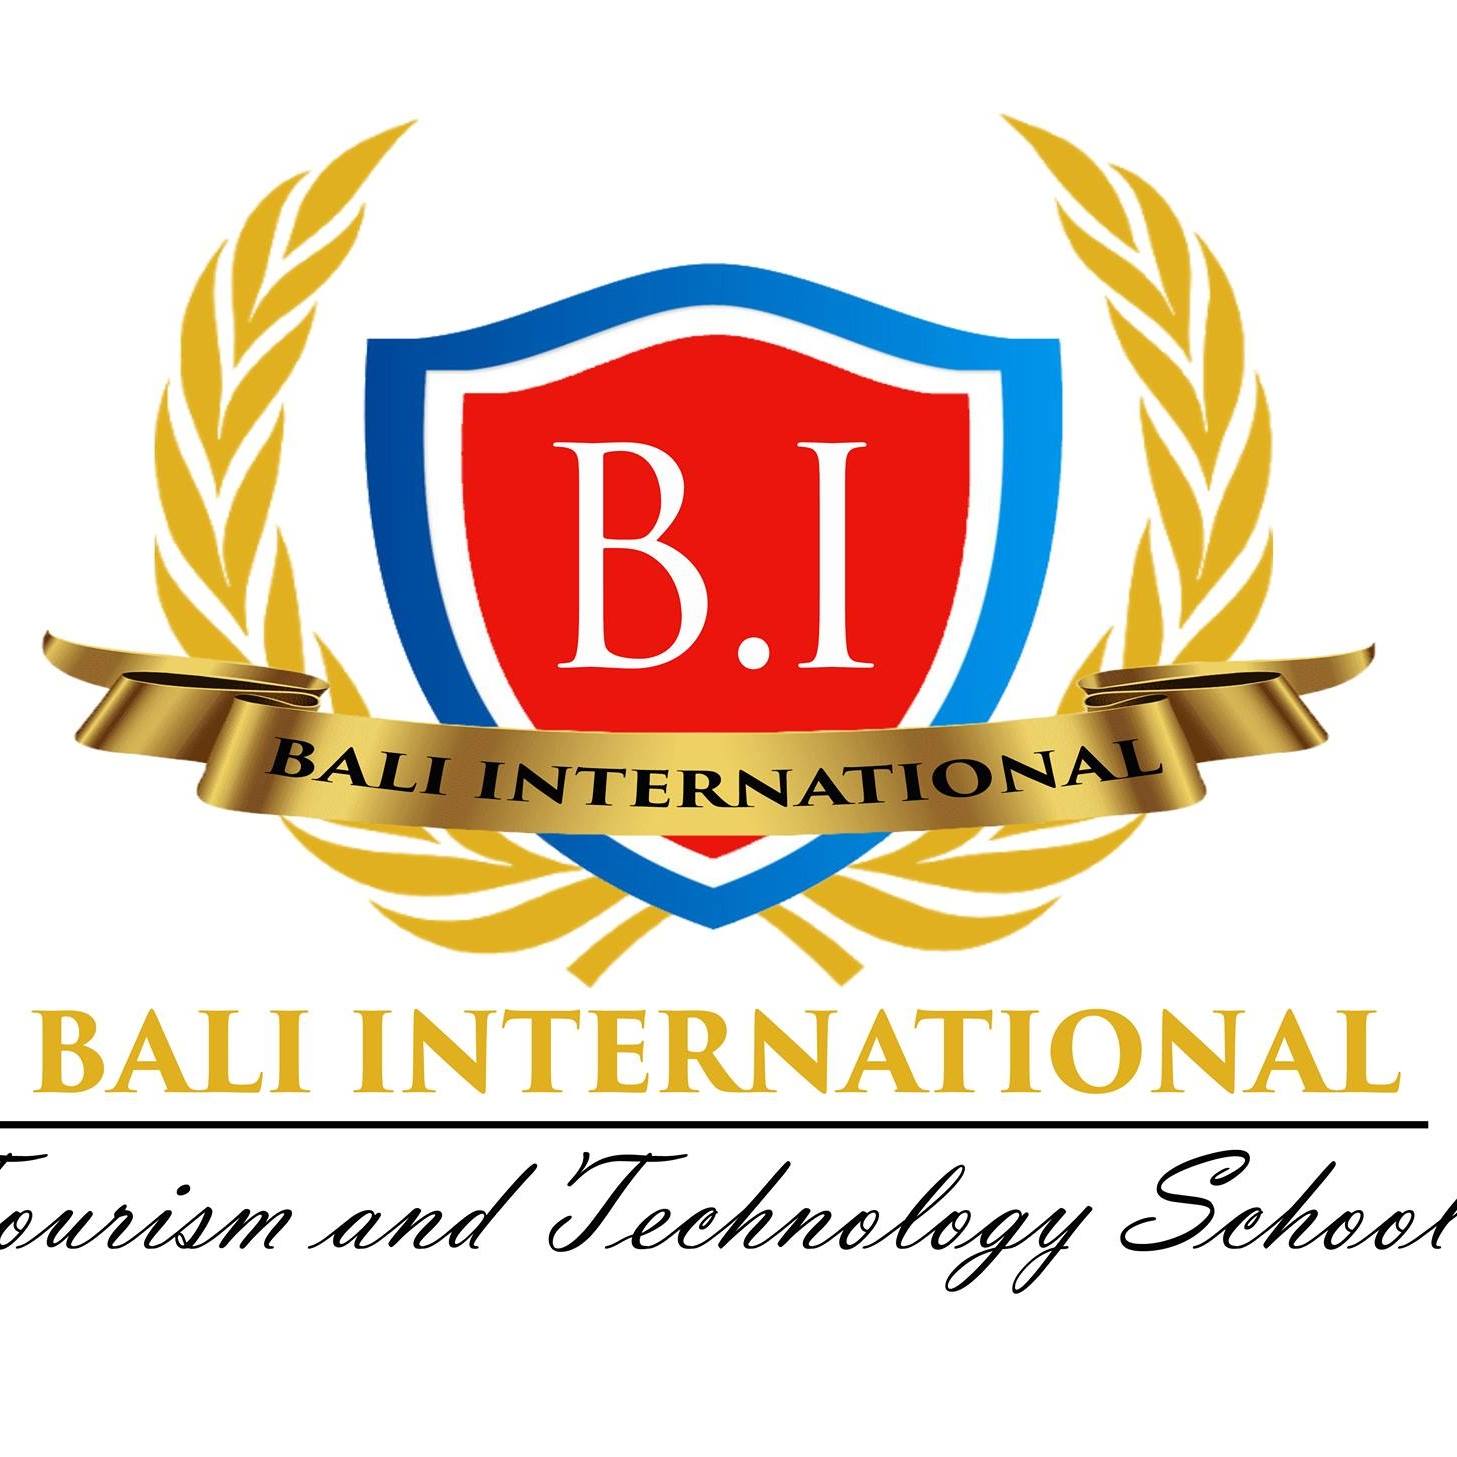 Bali international School - Buleleng, Bali